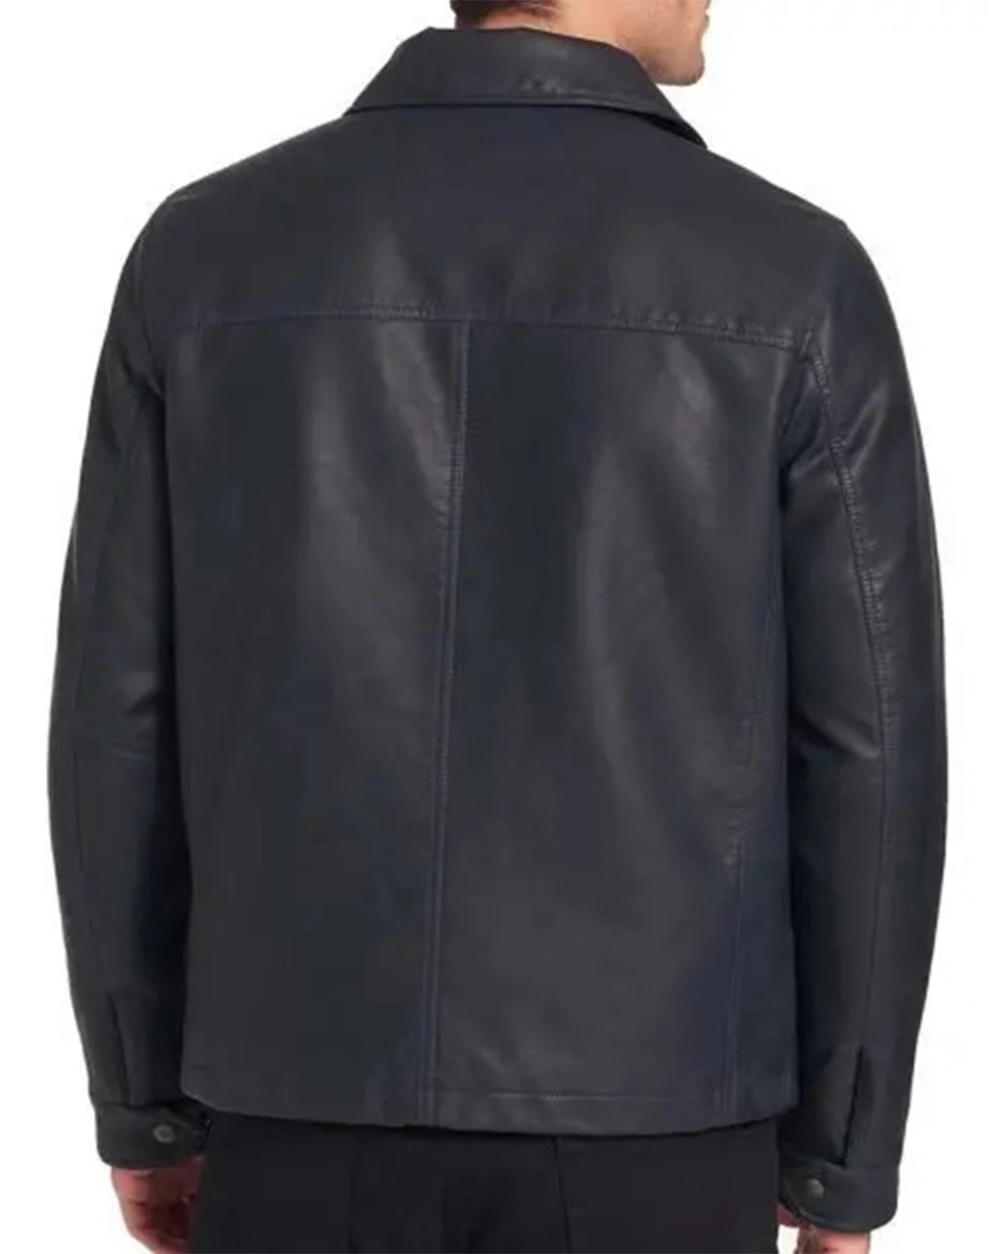 Barry Leather Open Bottom Jacket